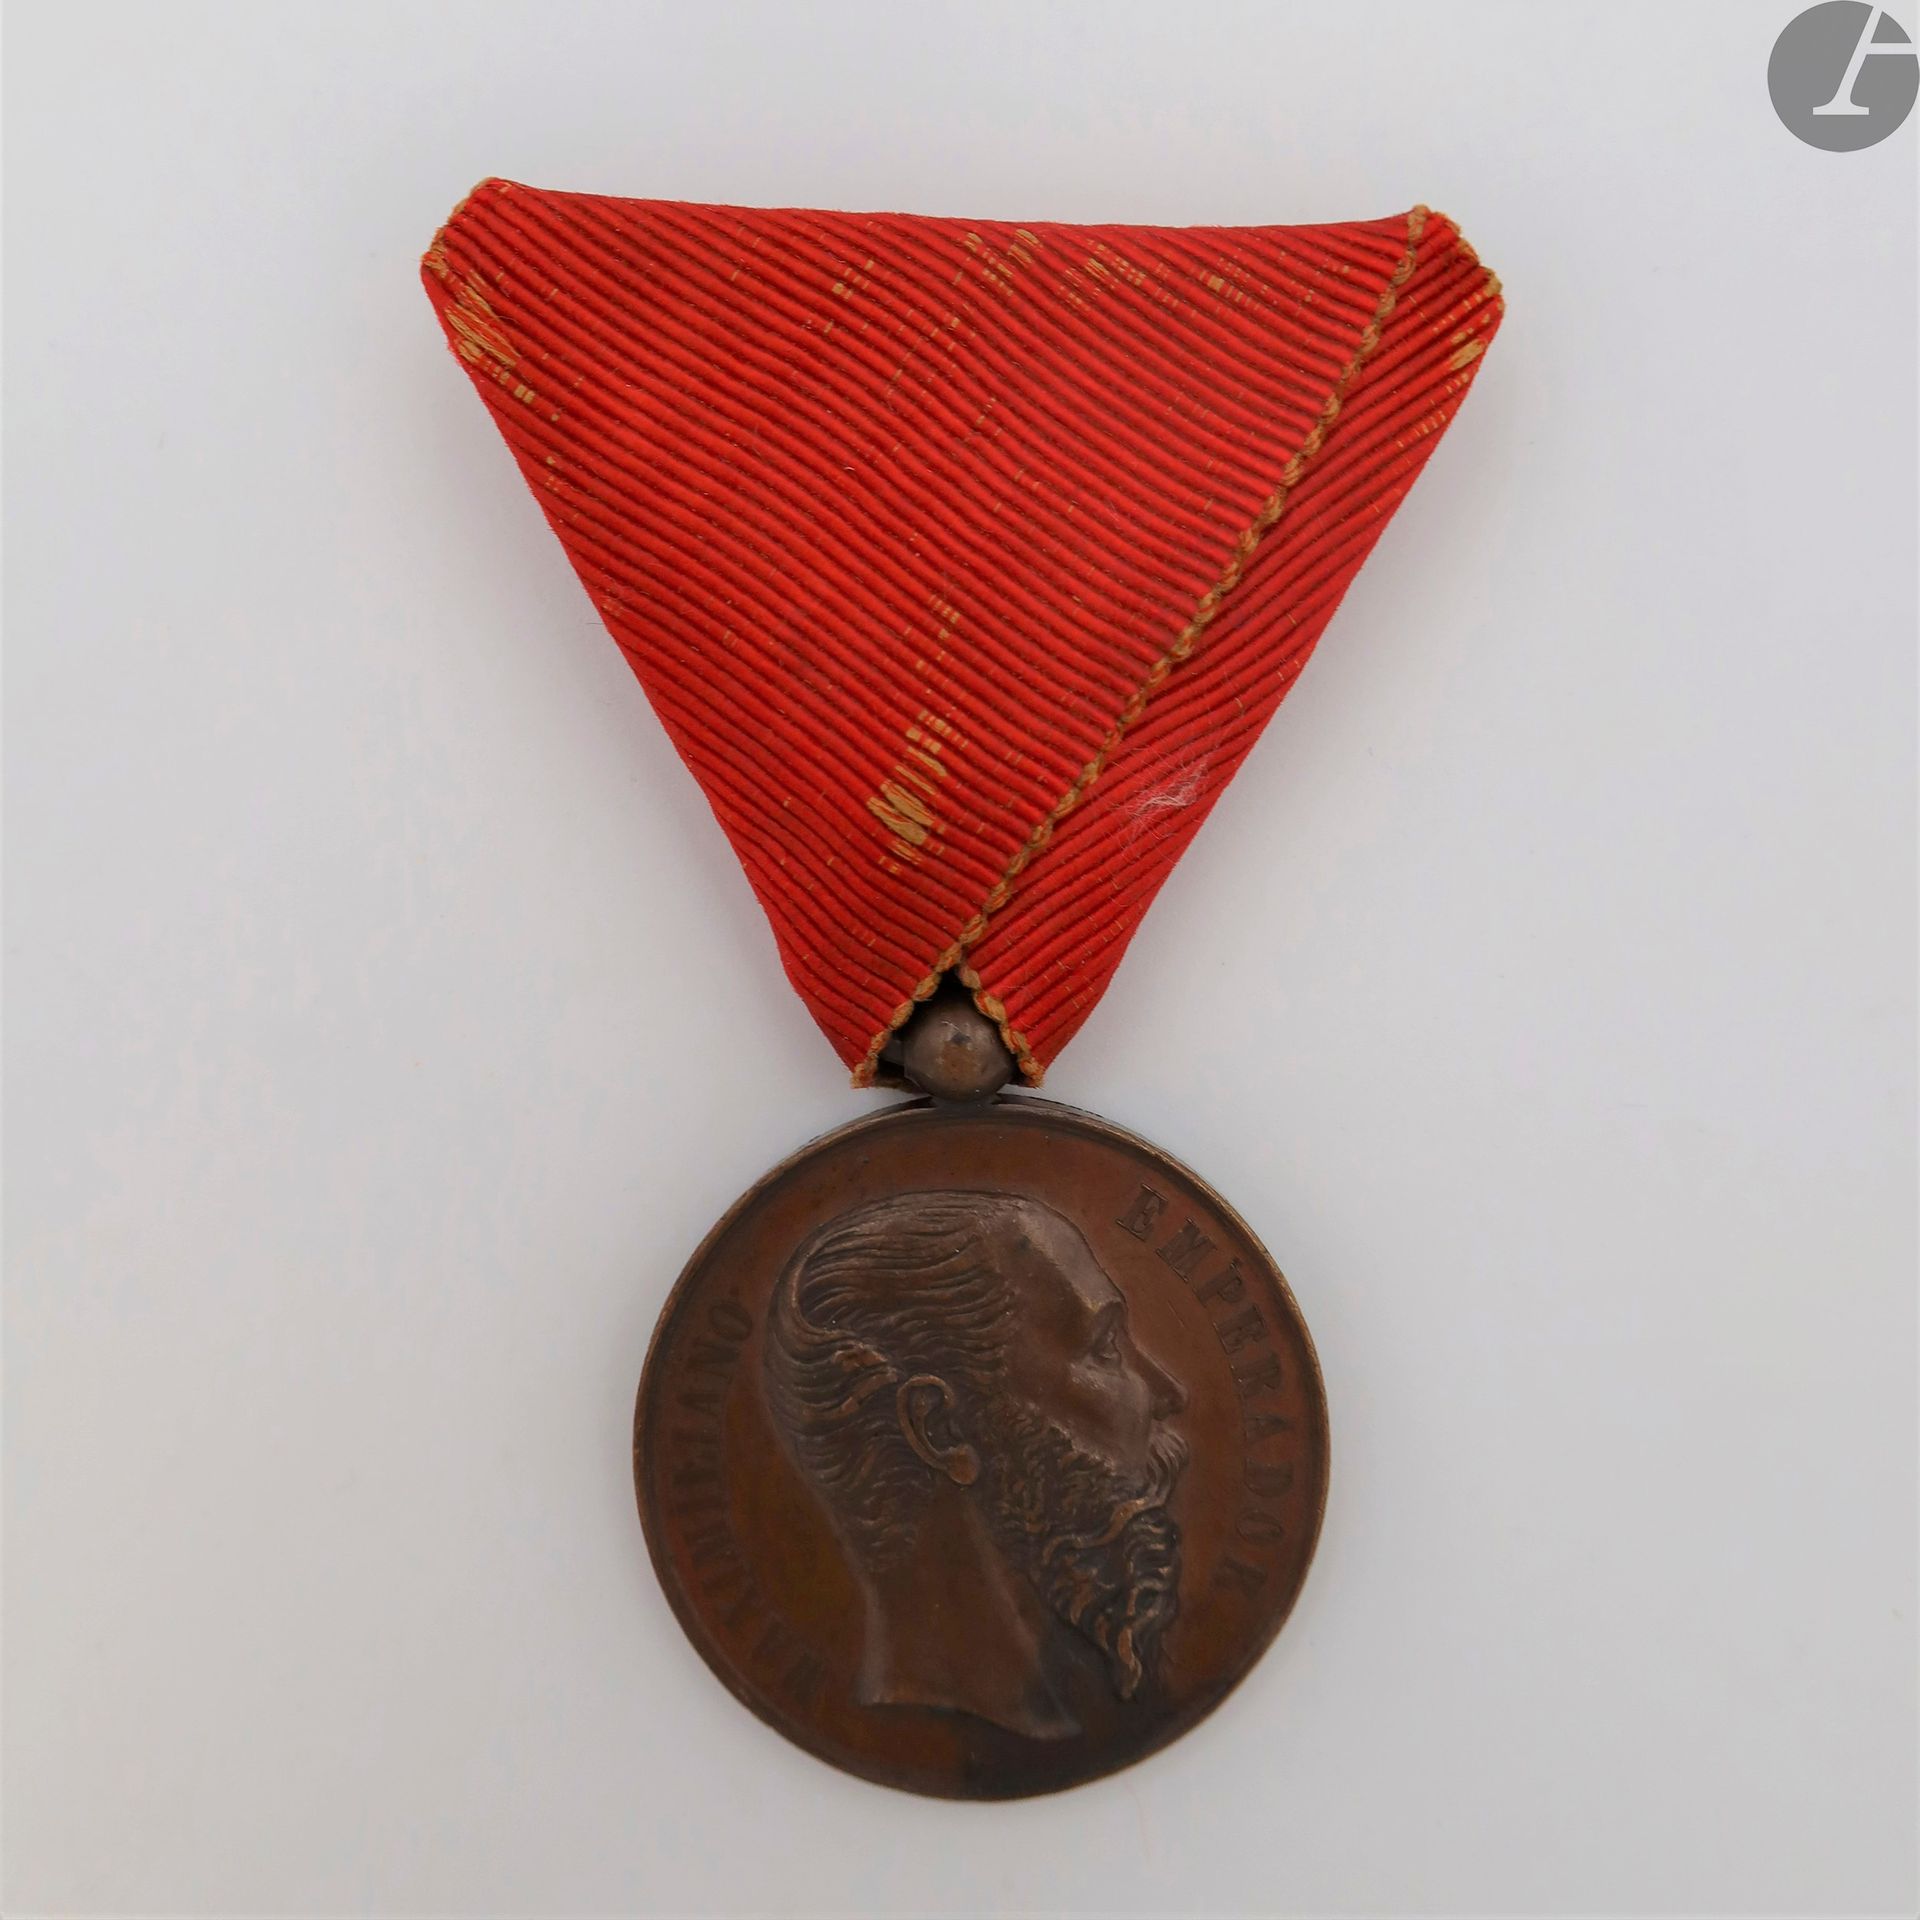 Null 墨西哥
帝国军功
勋章
"Al Merito Militar"（1863年）
铜质奖章，带有铜锈。三角形丝带，奥地利风格。
正面有马克西米利安的轮廓，&hellip;